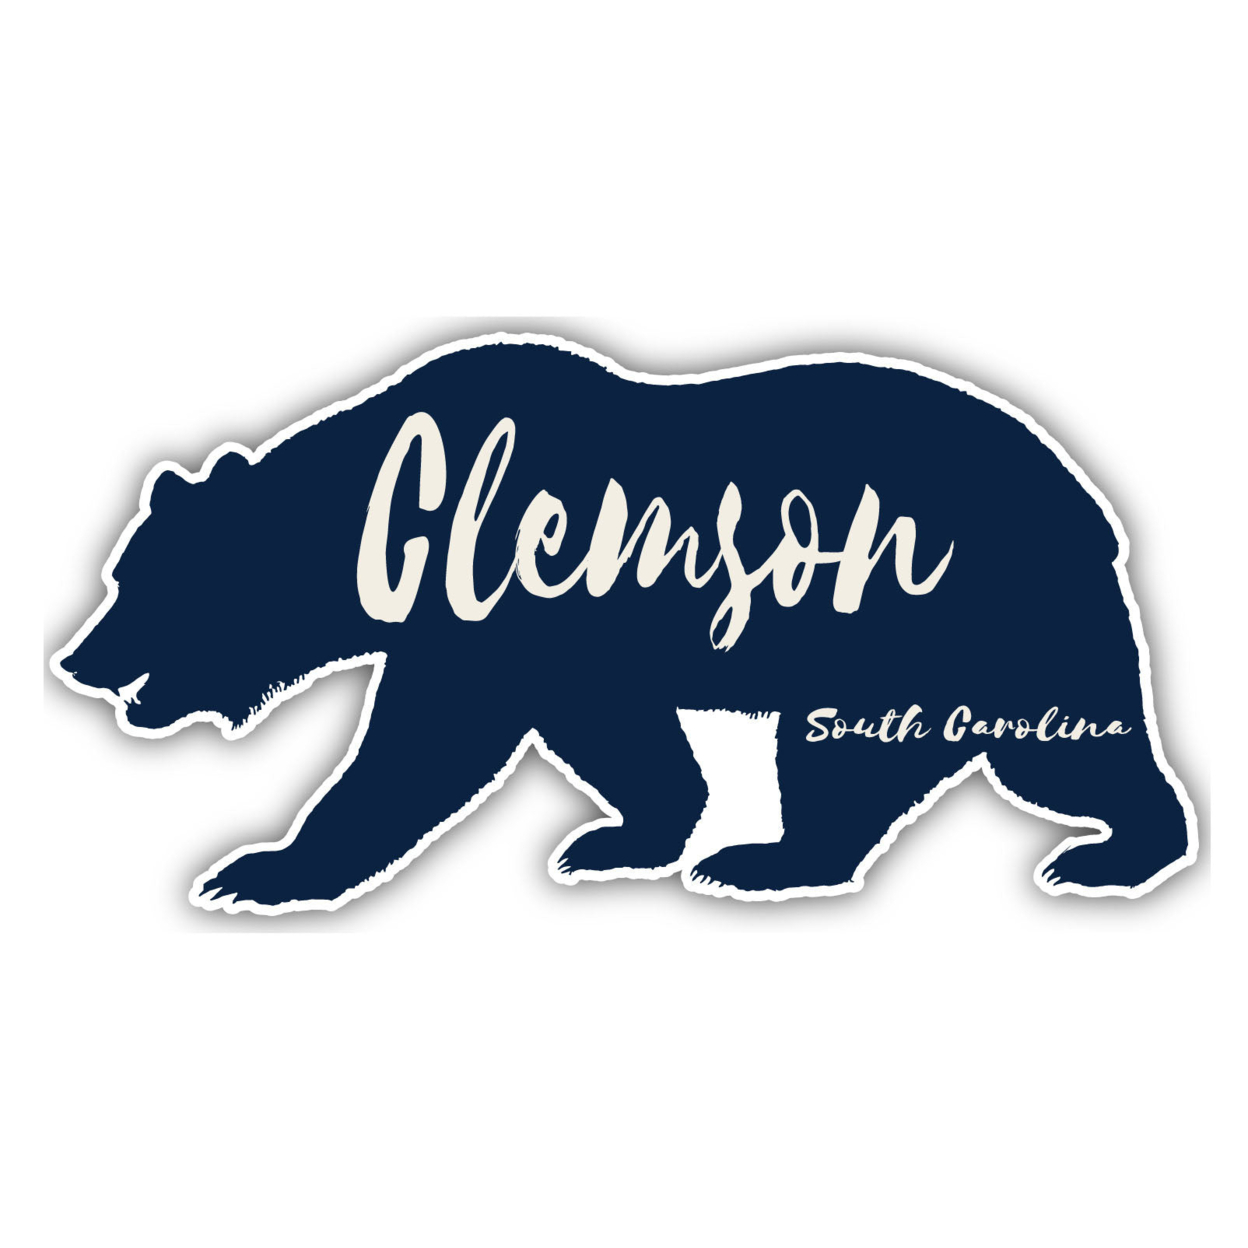 Clemson South Carolina Souvenir Decorative Stickers (Choose Theme And Size) - 4-Pack, 2-Inch, Bear